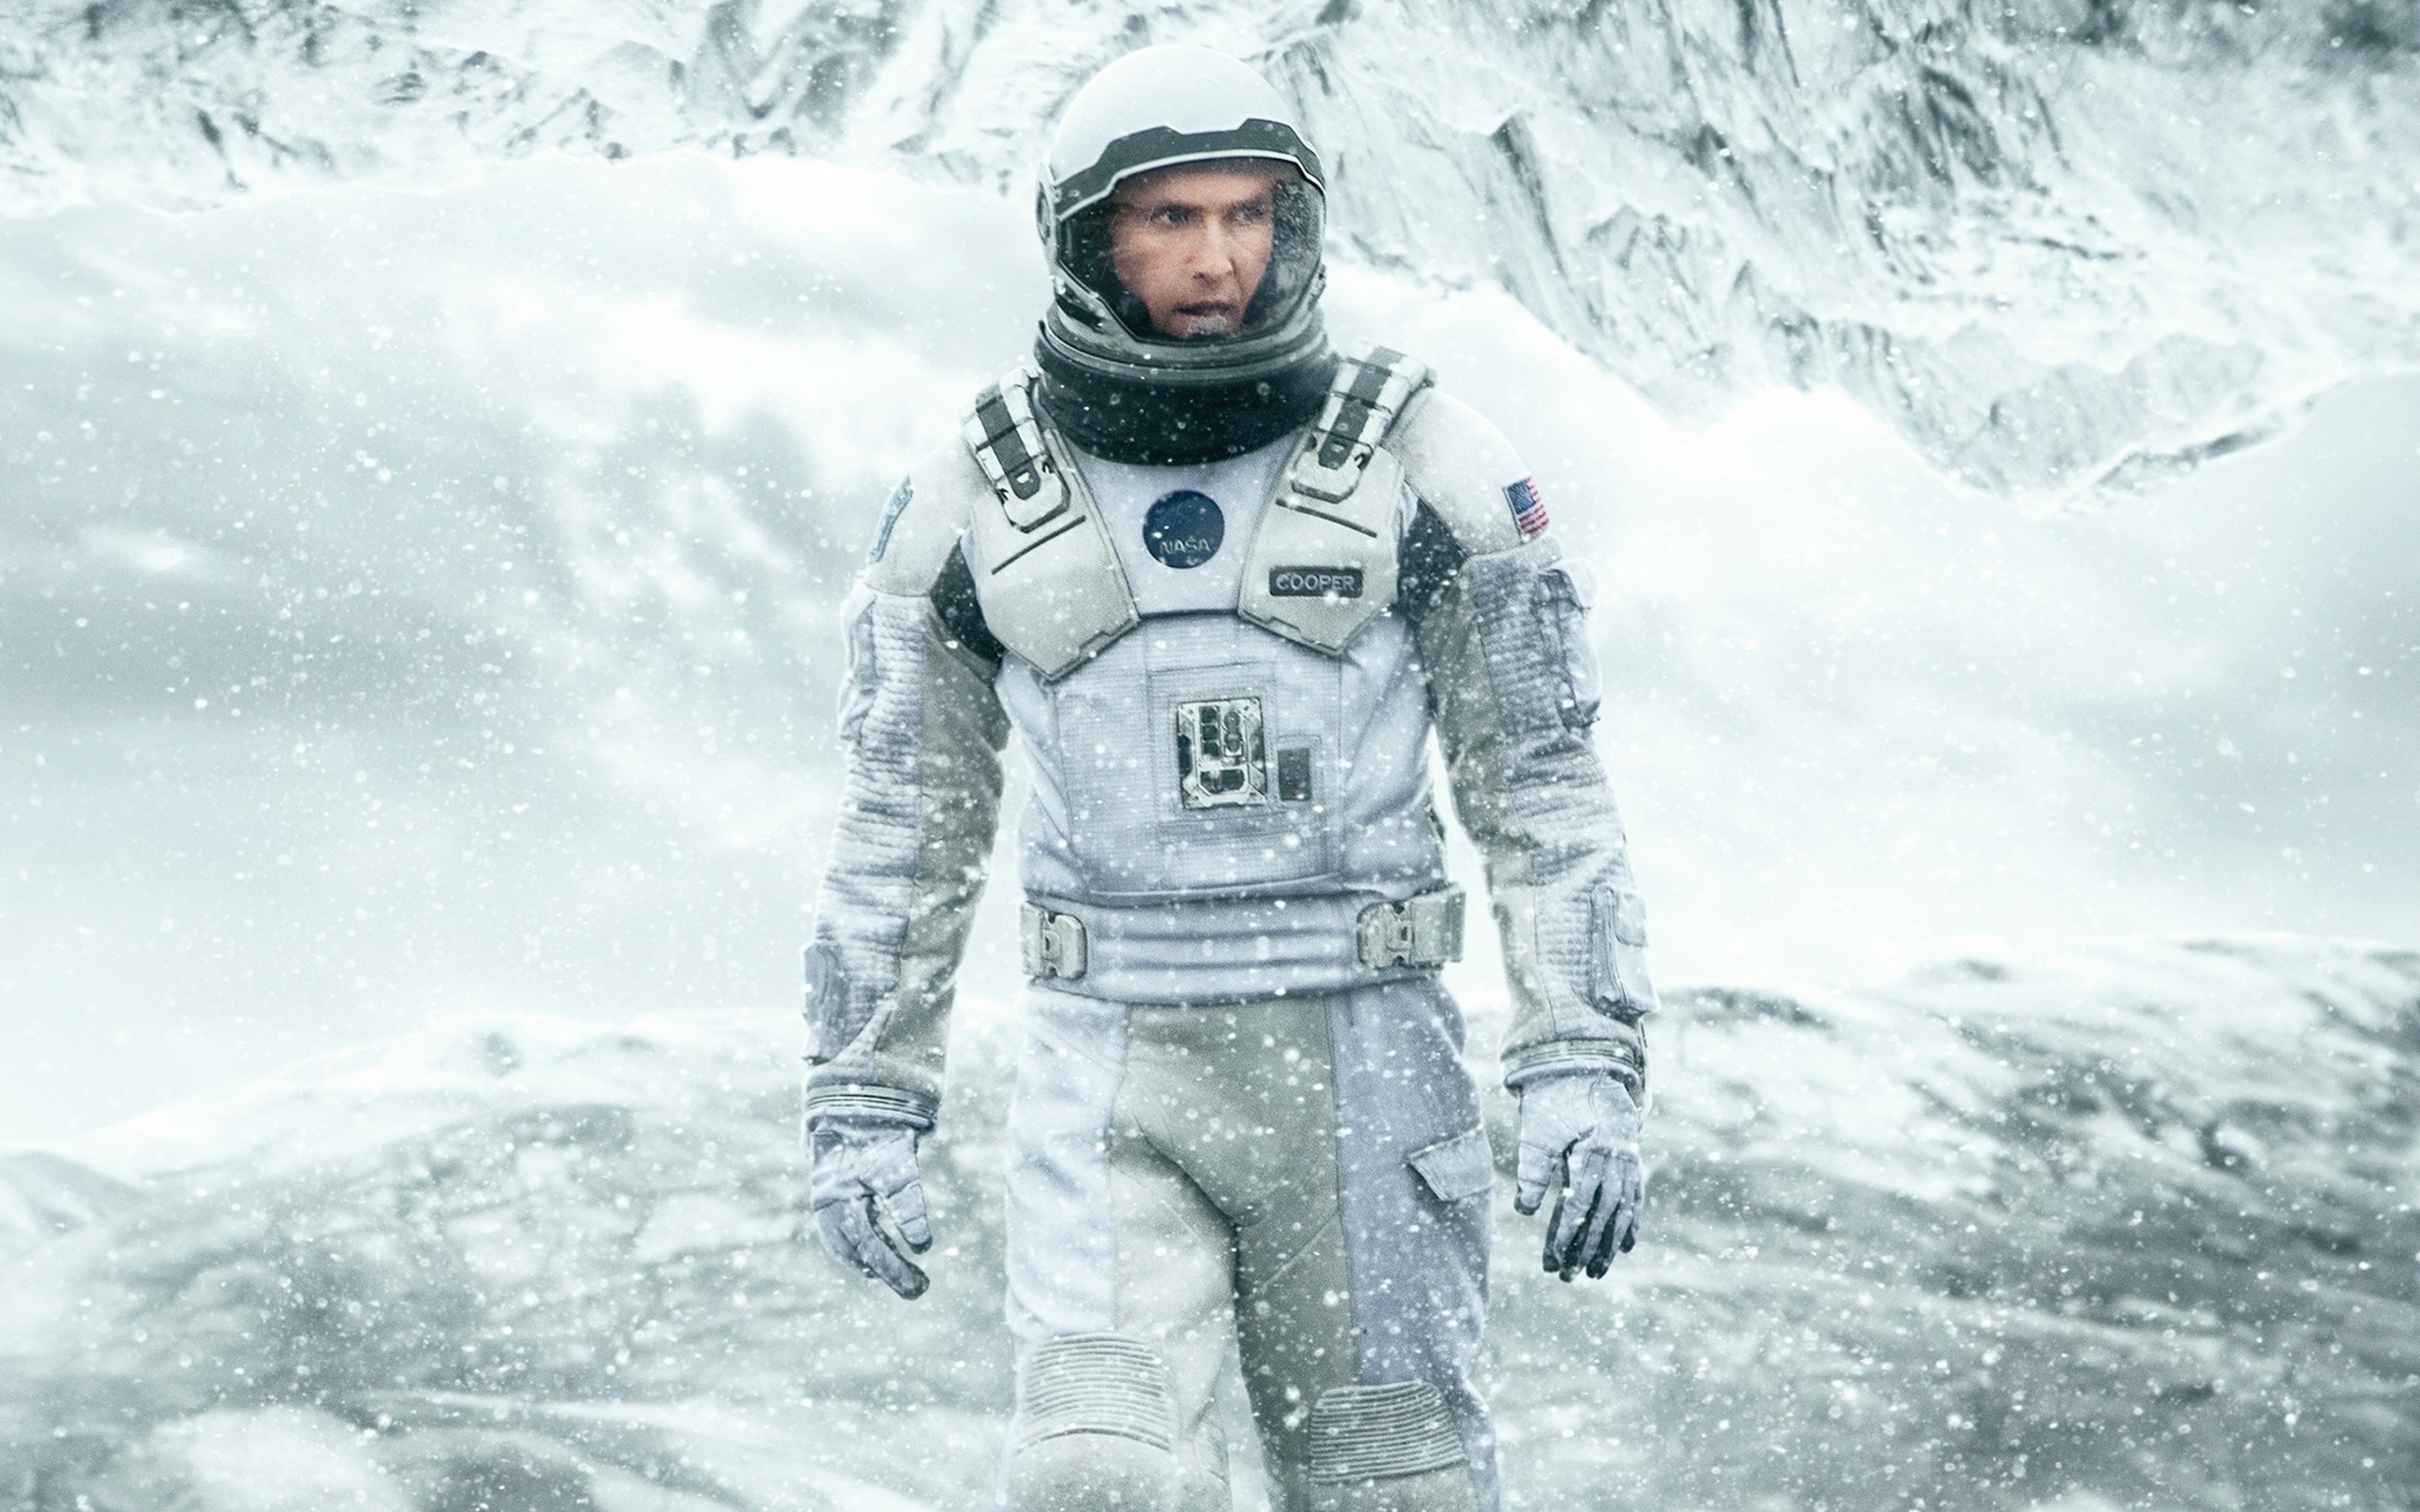 Interstellar: Matthew Mcconaughey, A trained NASA pilot with an engineering background. 2560x1600 HD Wallpaper.